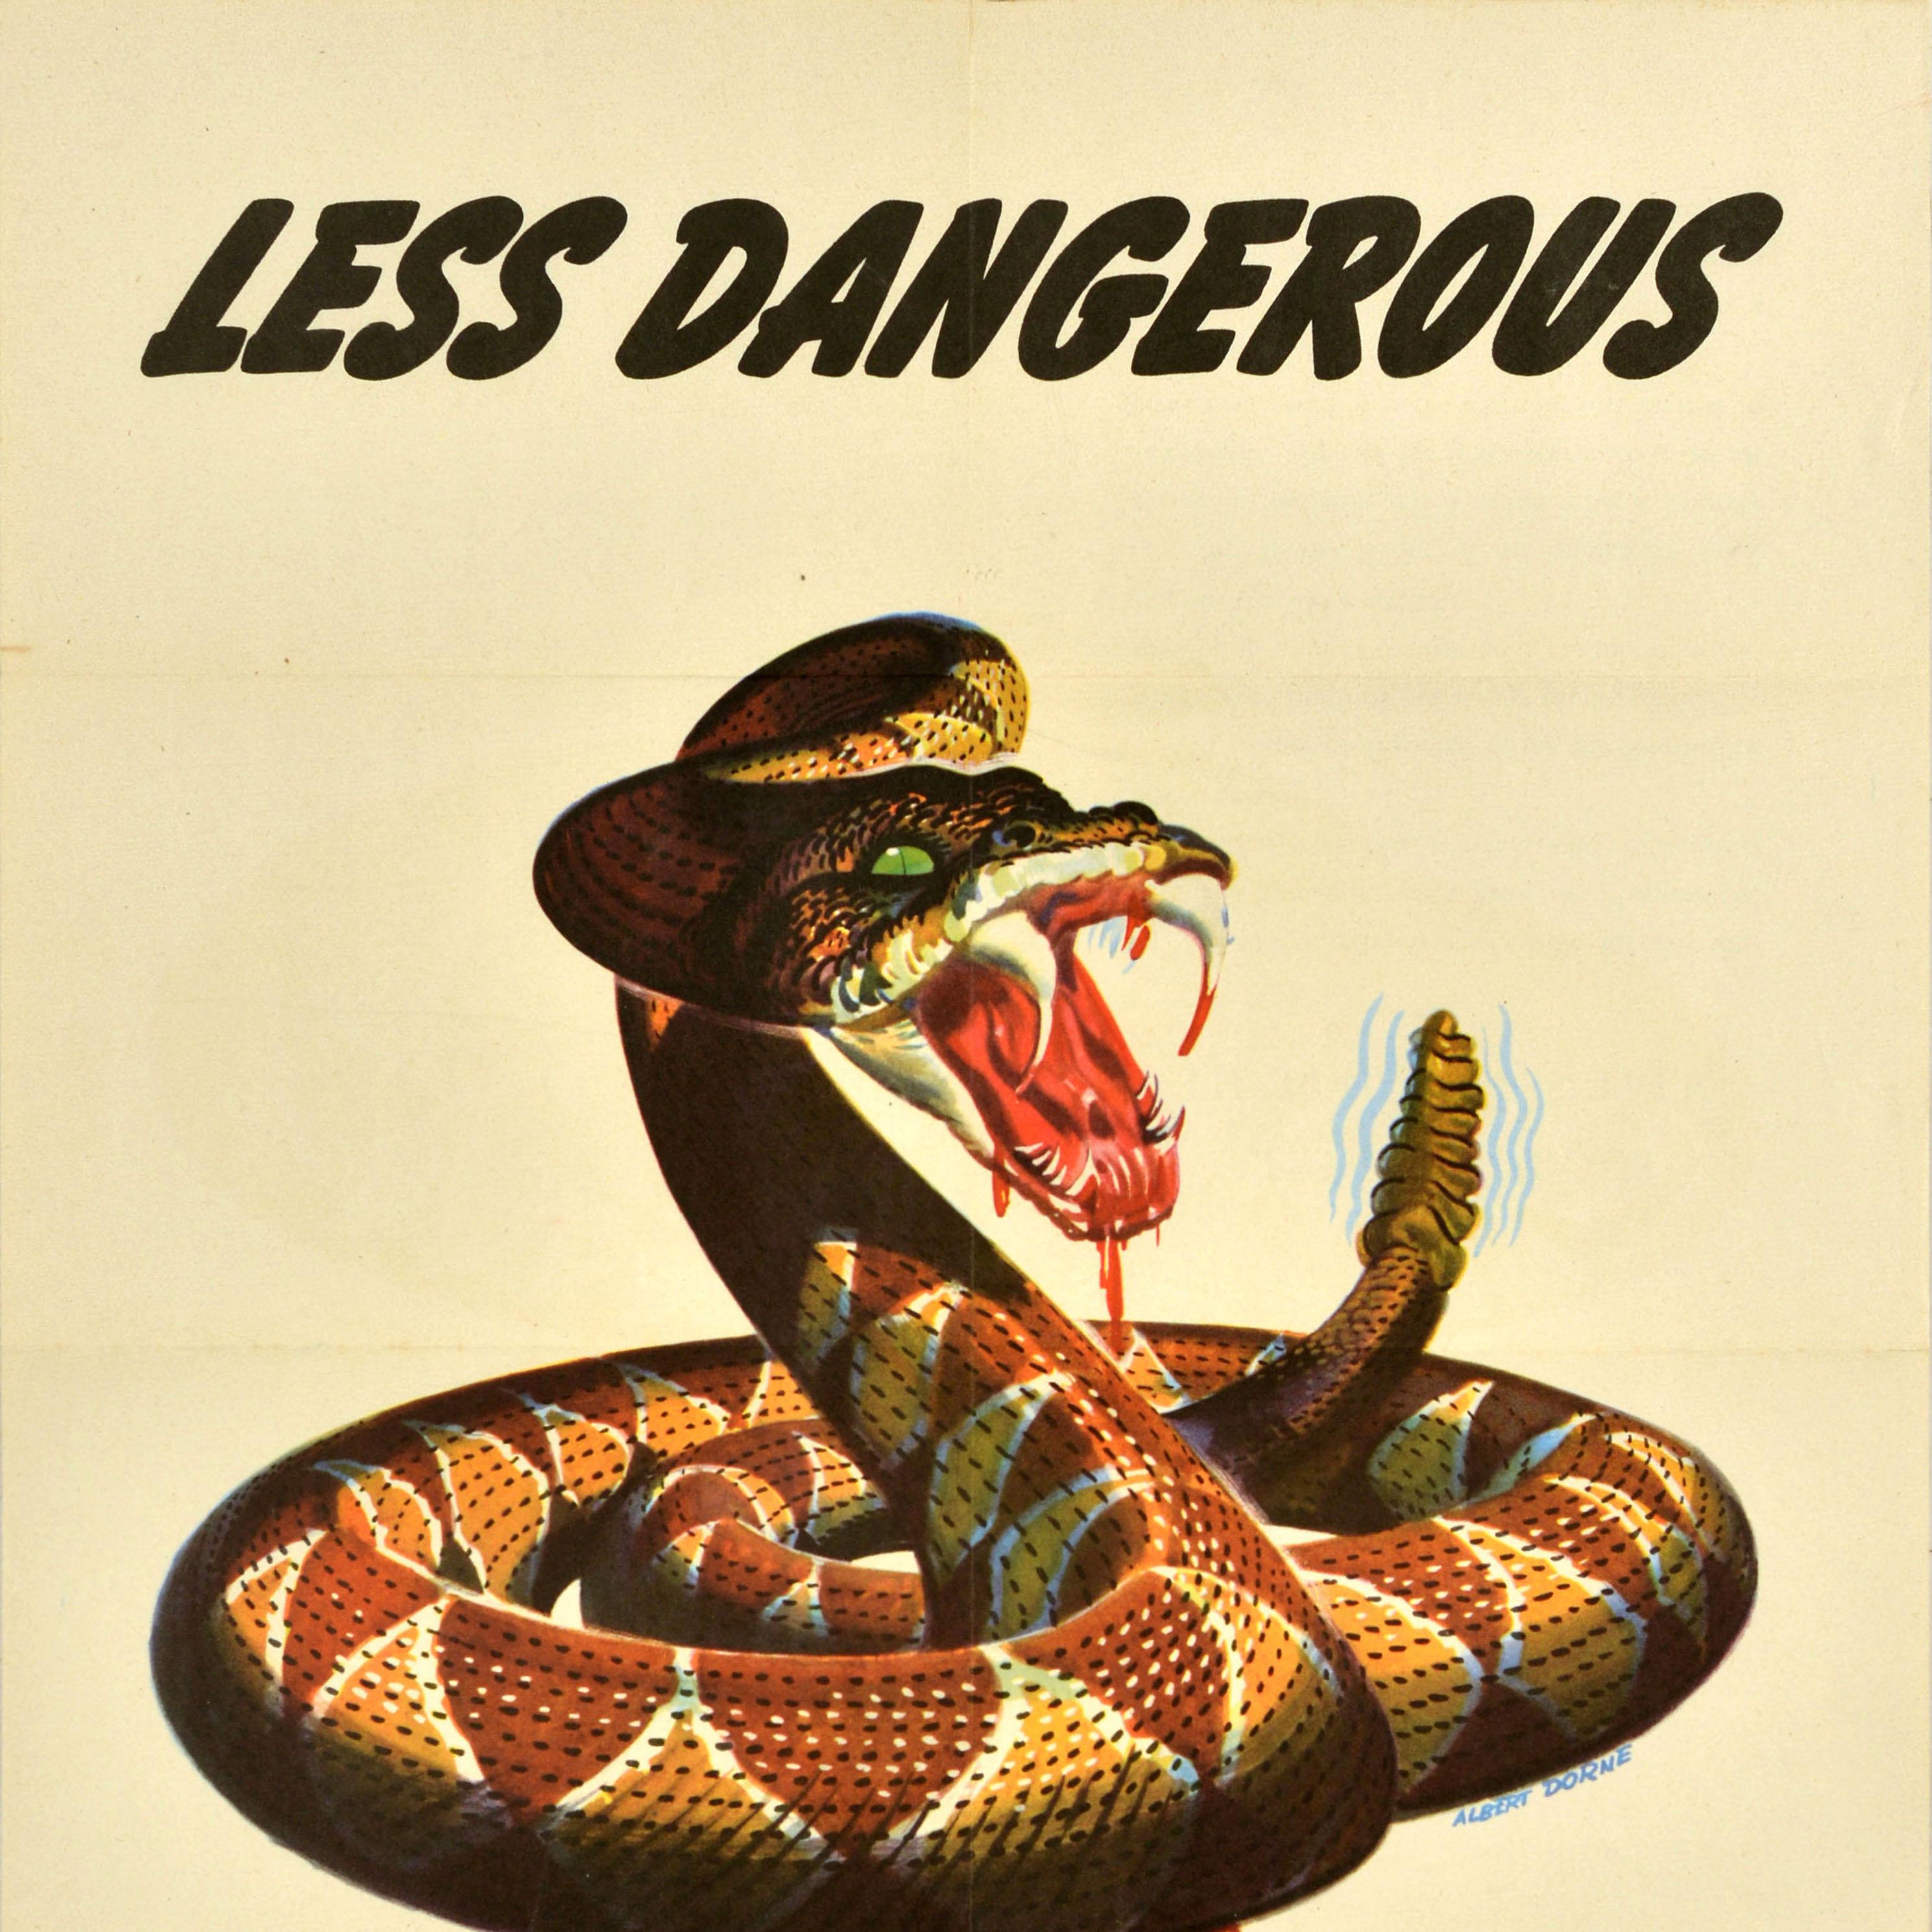 Original Vintage War Propaganda Poster Careless Talk Snake WWII Albert Dorne - Print by Albert L. Dorne